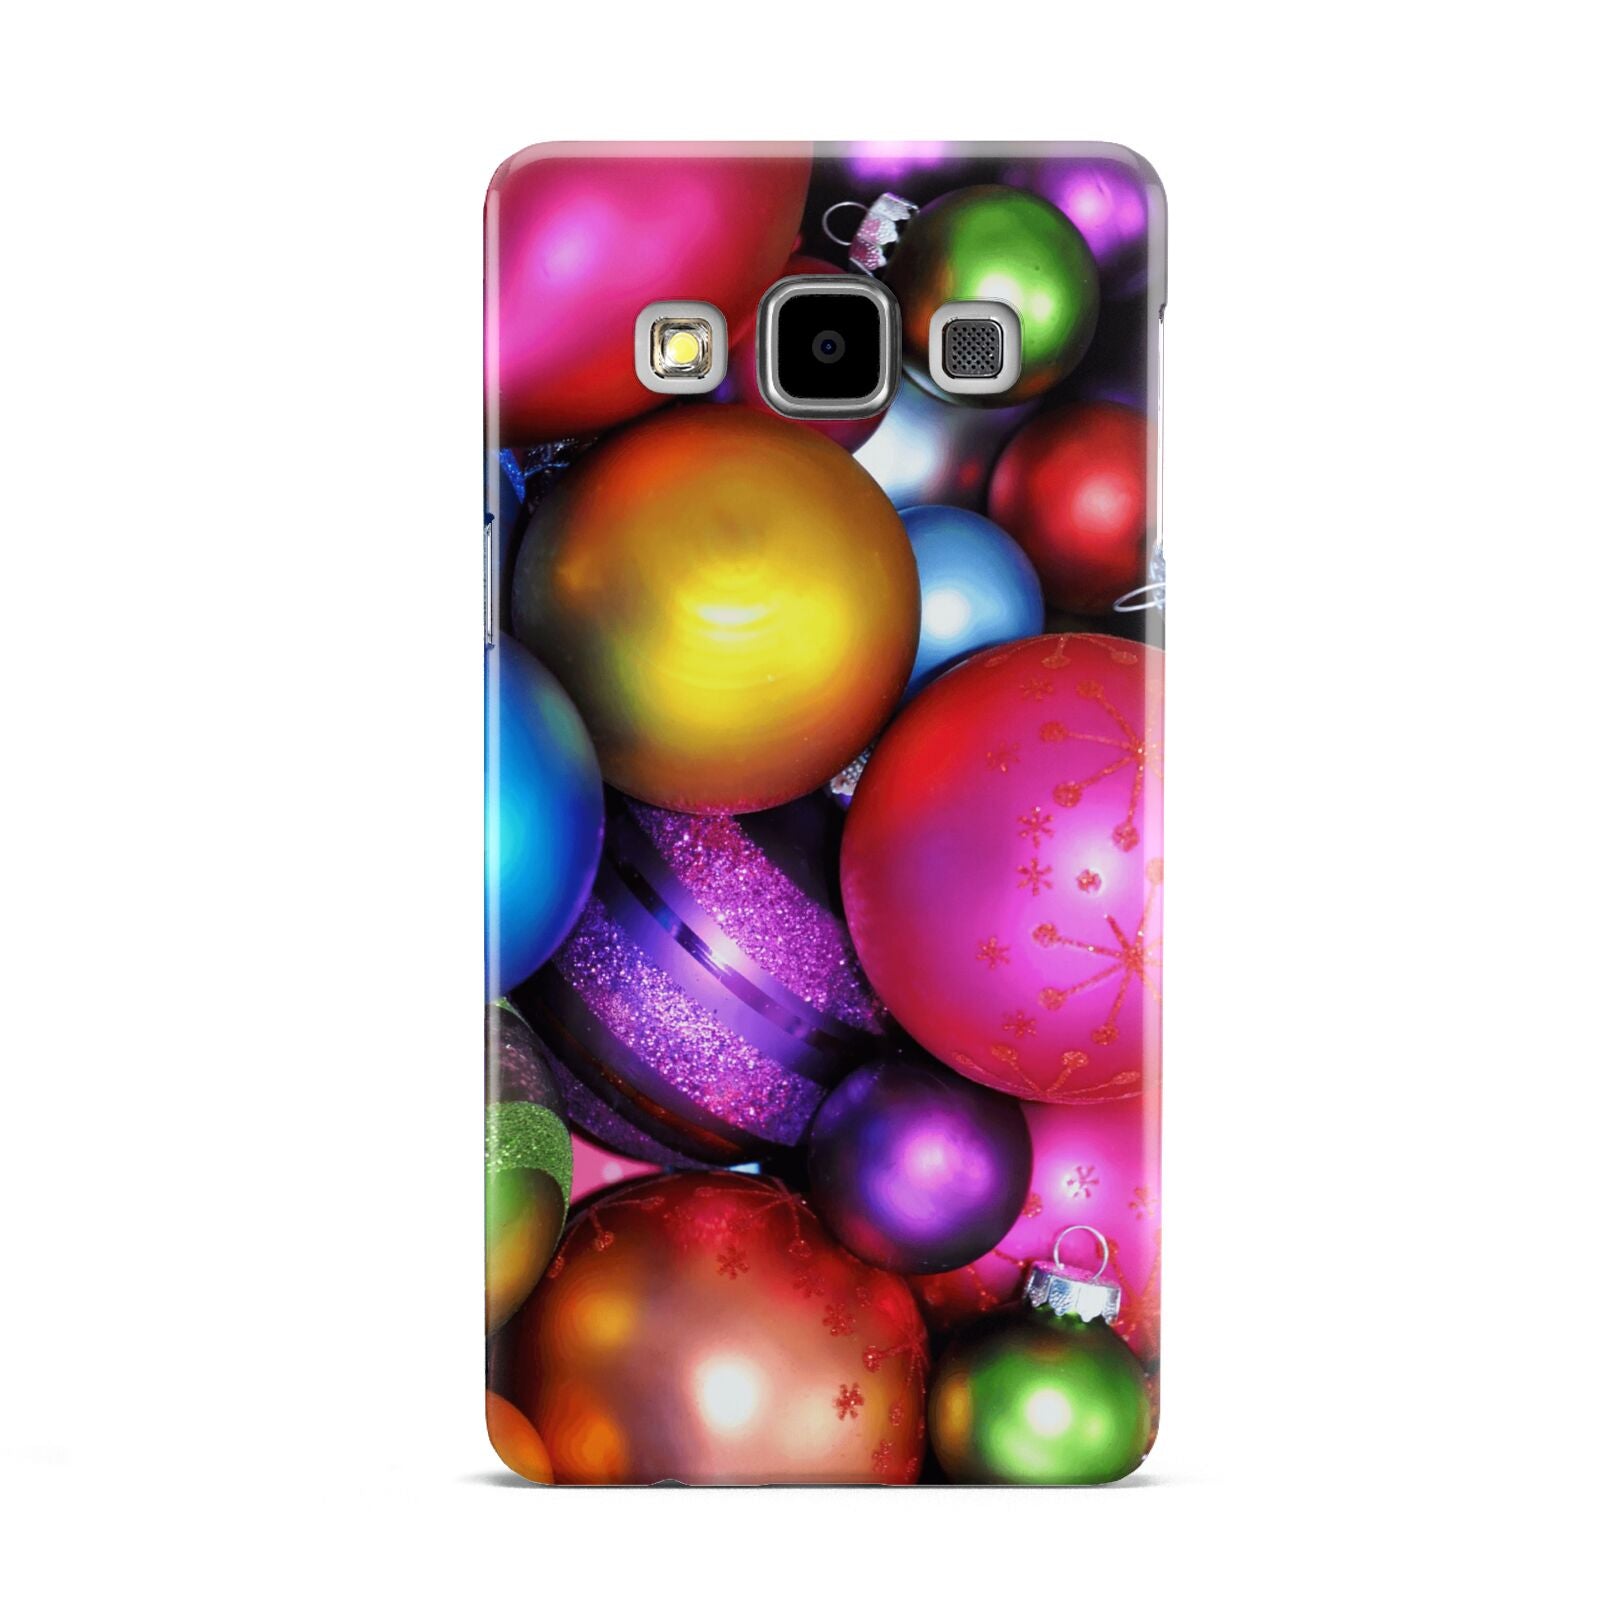 Bauble Samsung Galaxy A5 Case